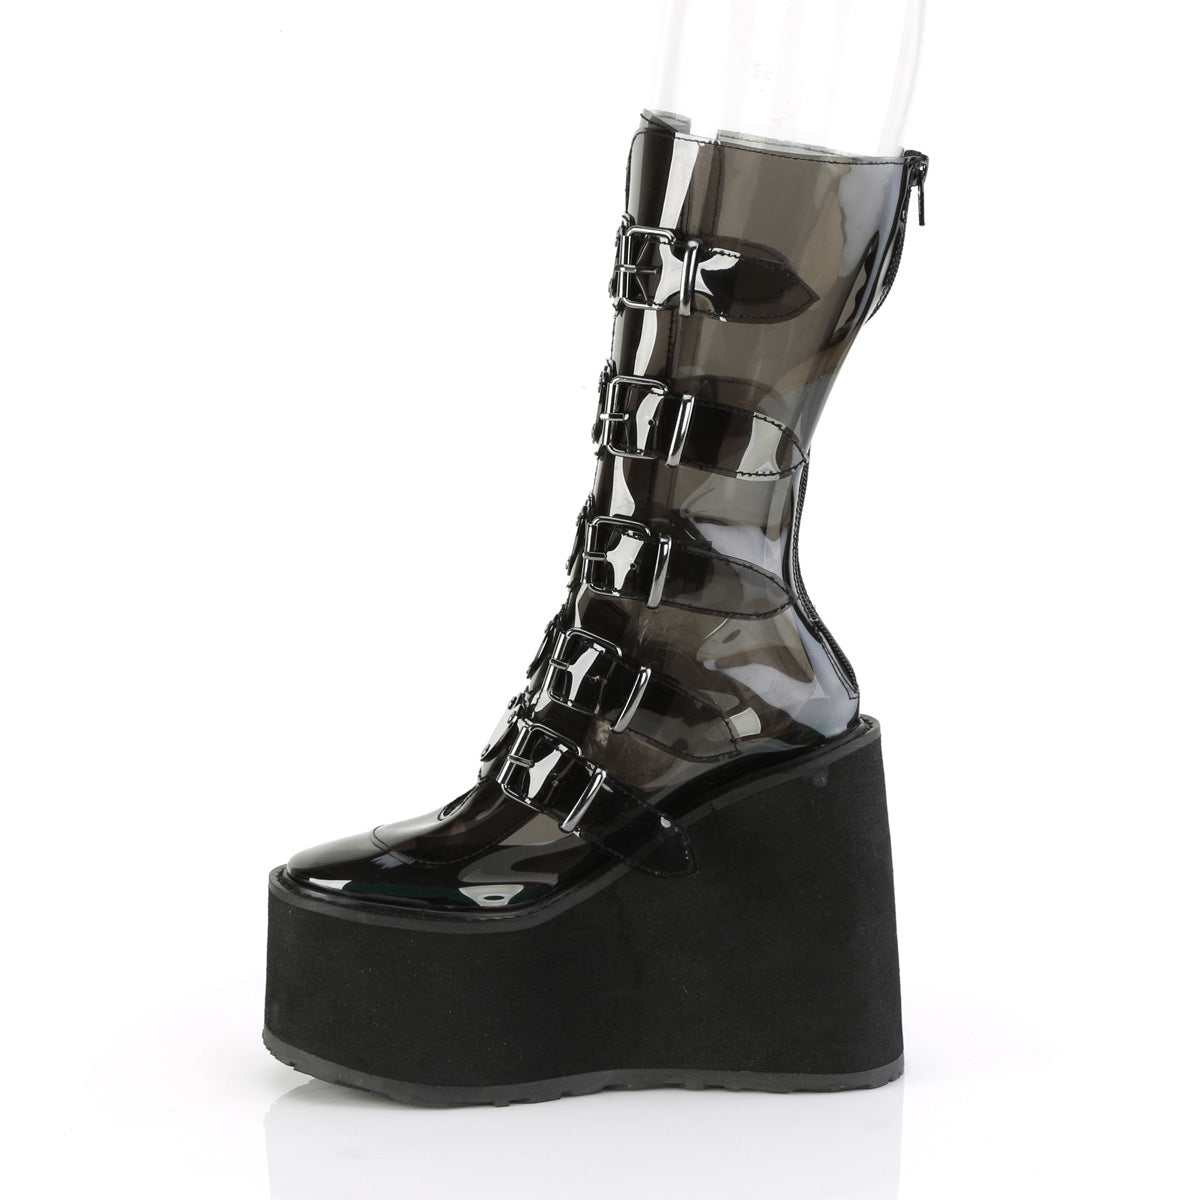 SWING-230C Demonia Smoke TPU Women's Mid-Calf & Knee High Boots [Demonia Cult Alternative Footwear]